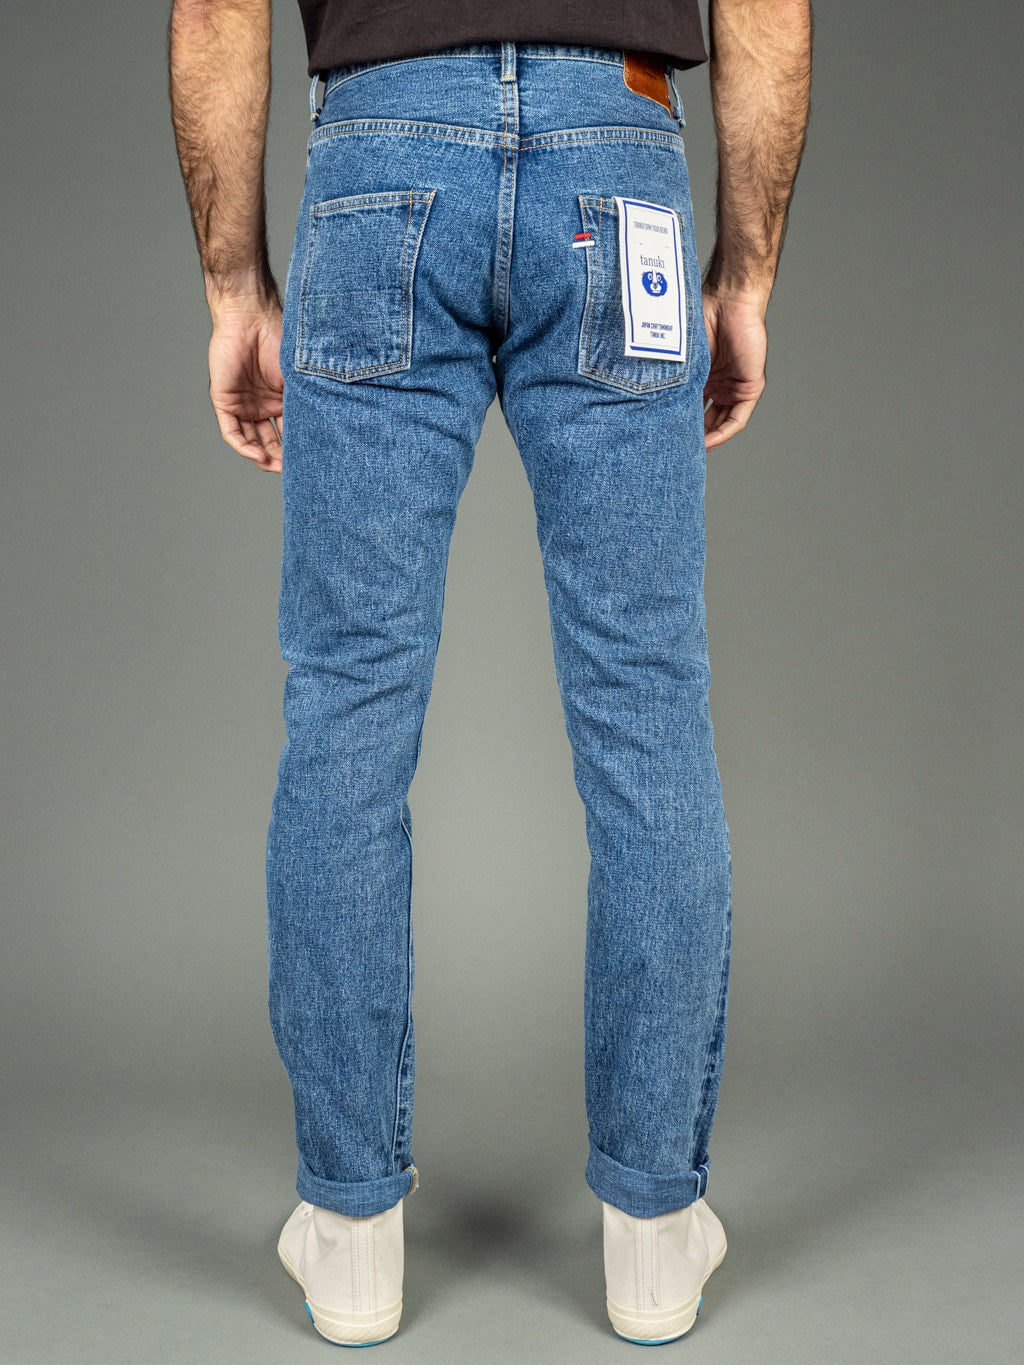 Tanuki Yurai Stonewash High Tapered Jeans Back